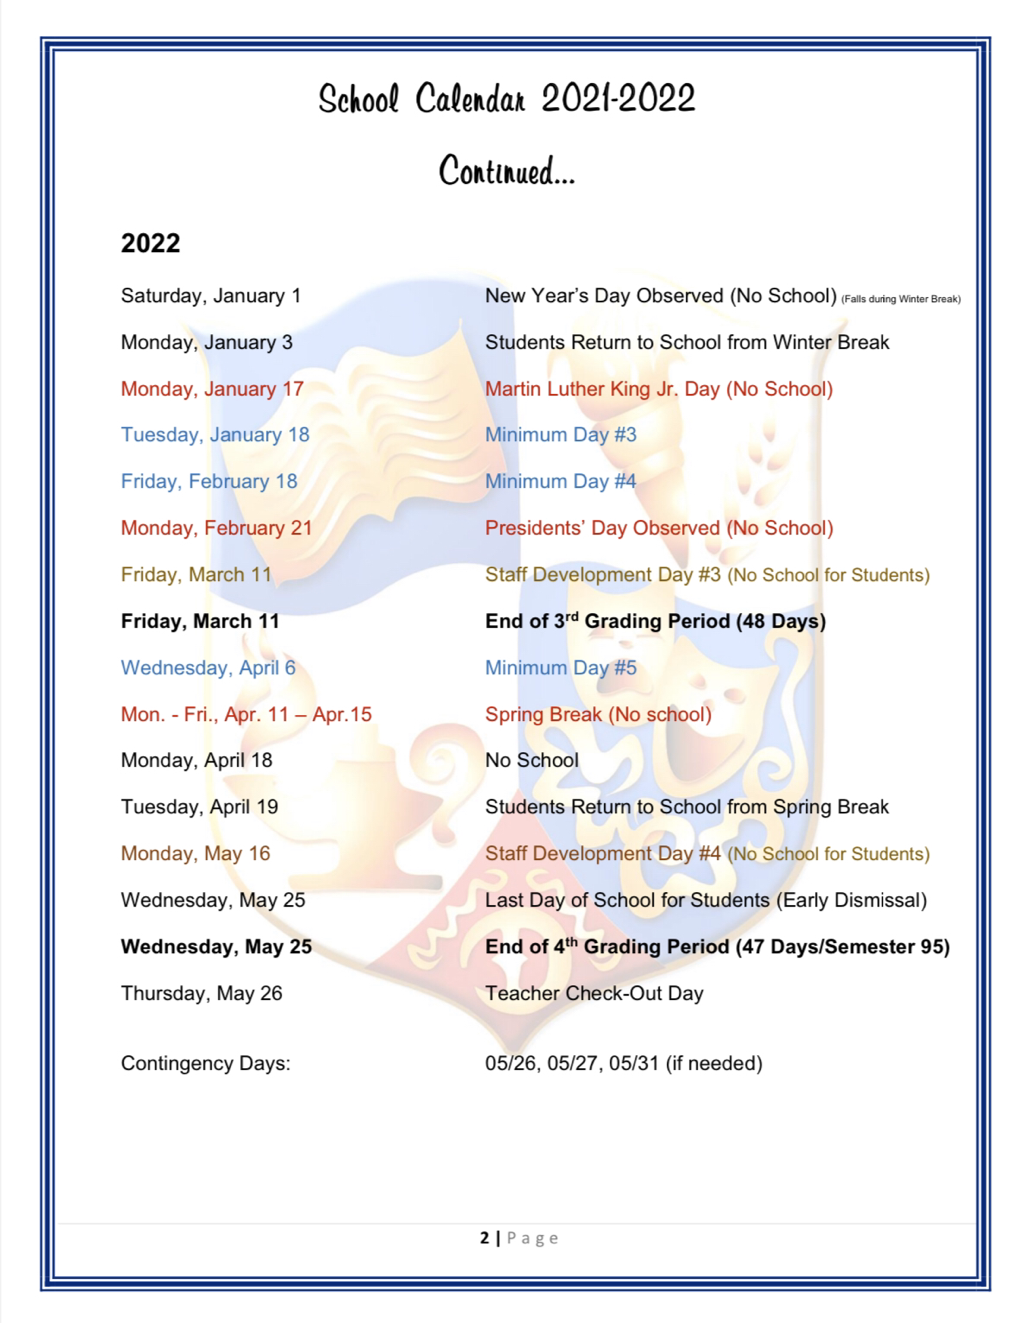 doral-academy-calendar-customize-and-print